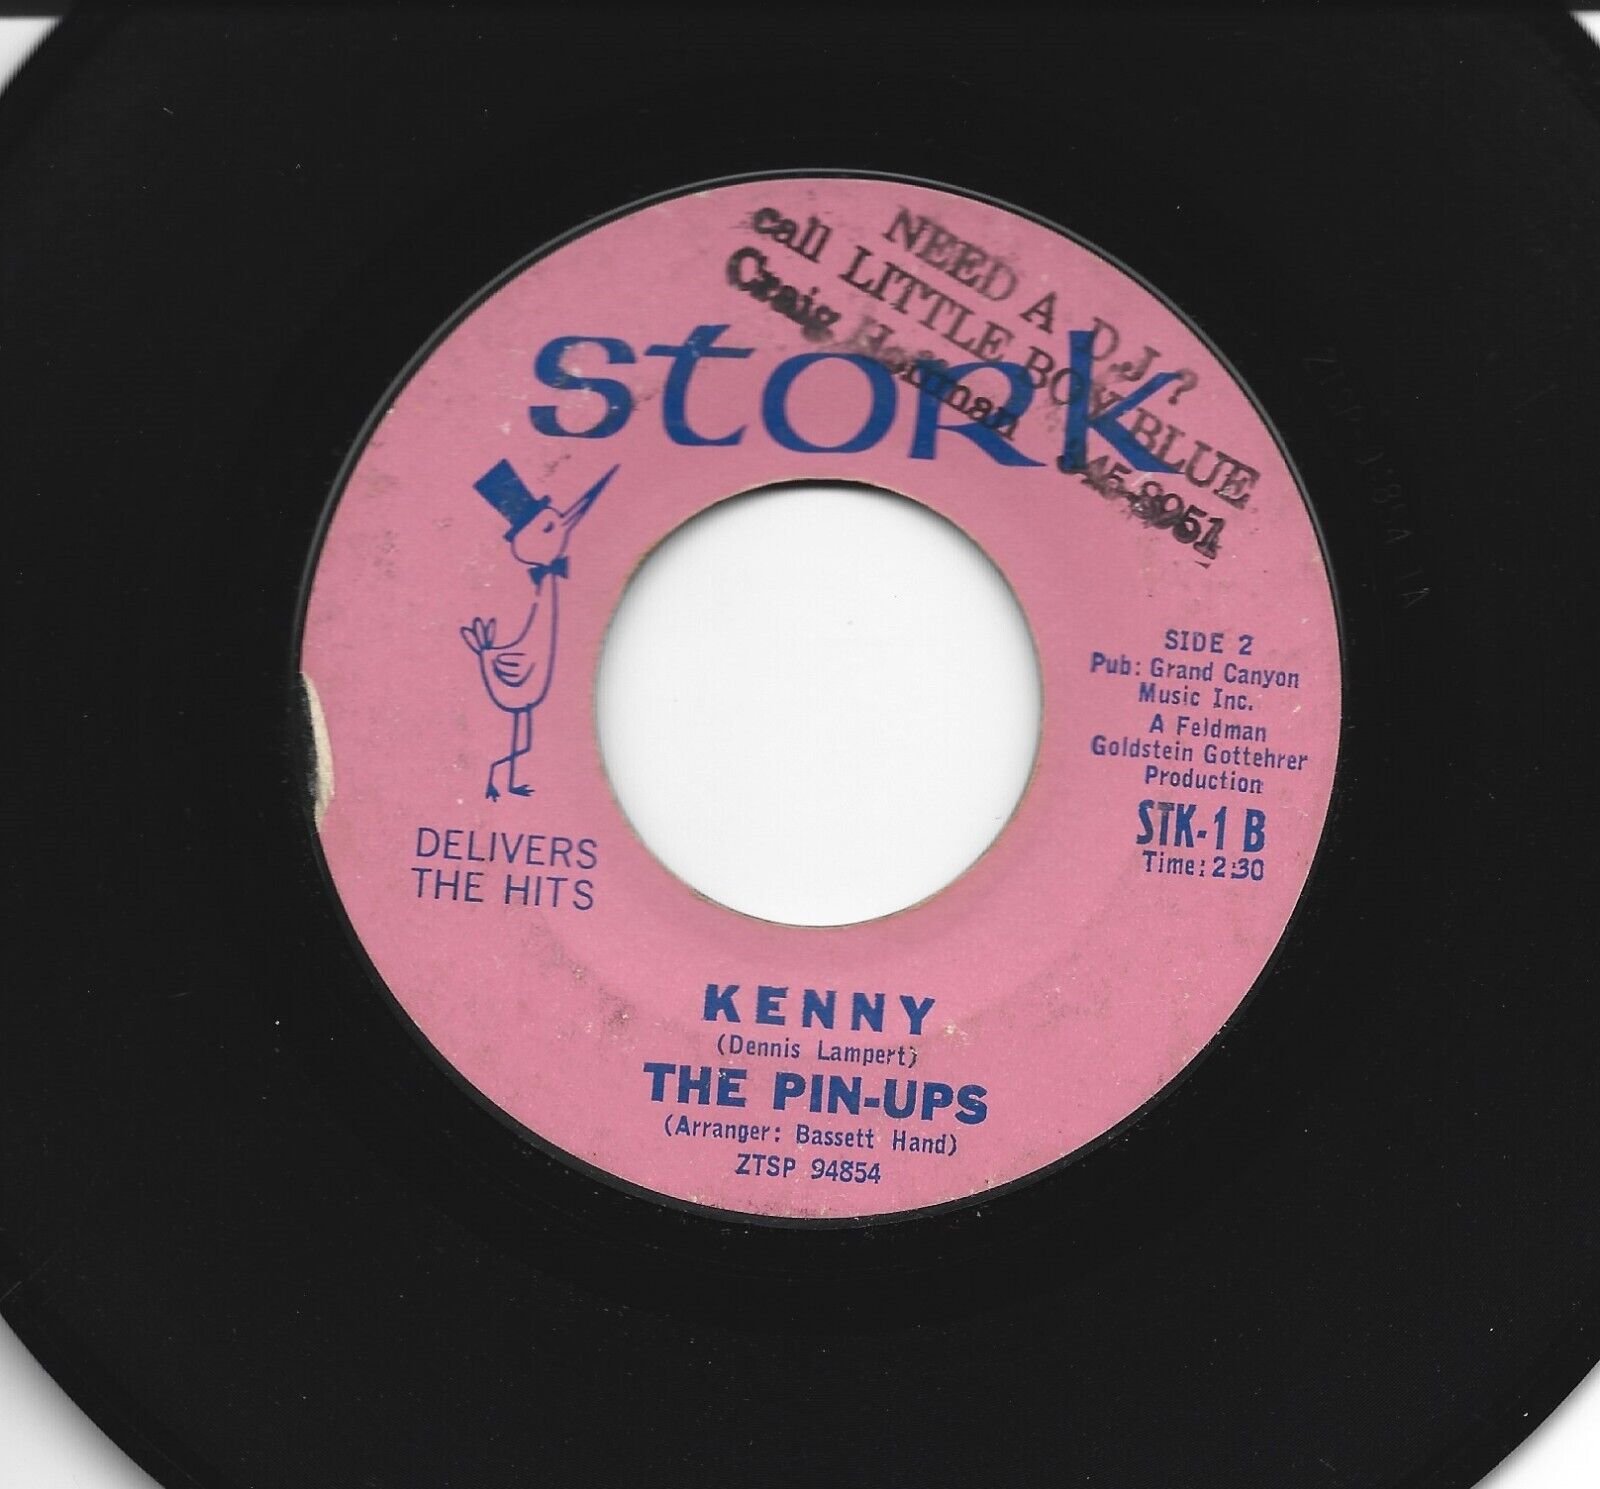 TEEN DOOWOP GIRL GROUP 45- PIN-UPS - KENNY  /  LOOKING FOR BOYS -HEAR 1964 STORK